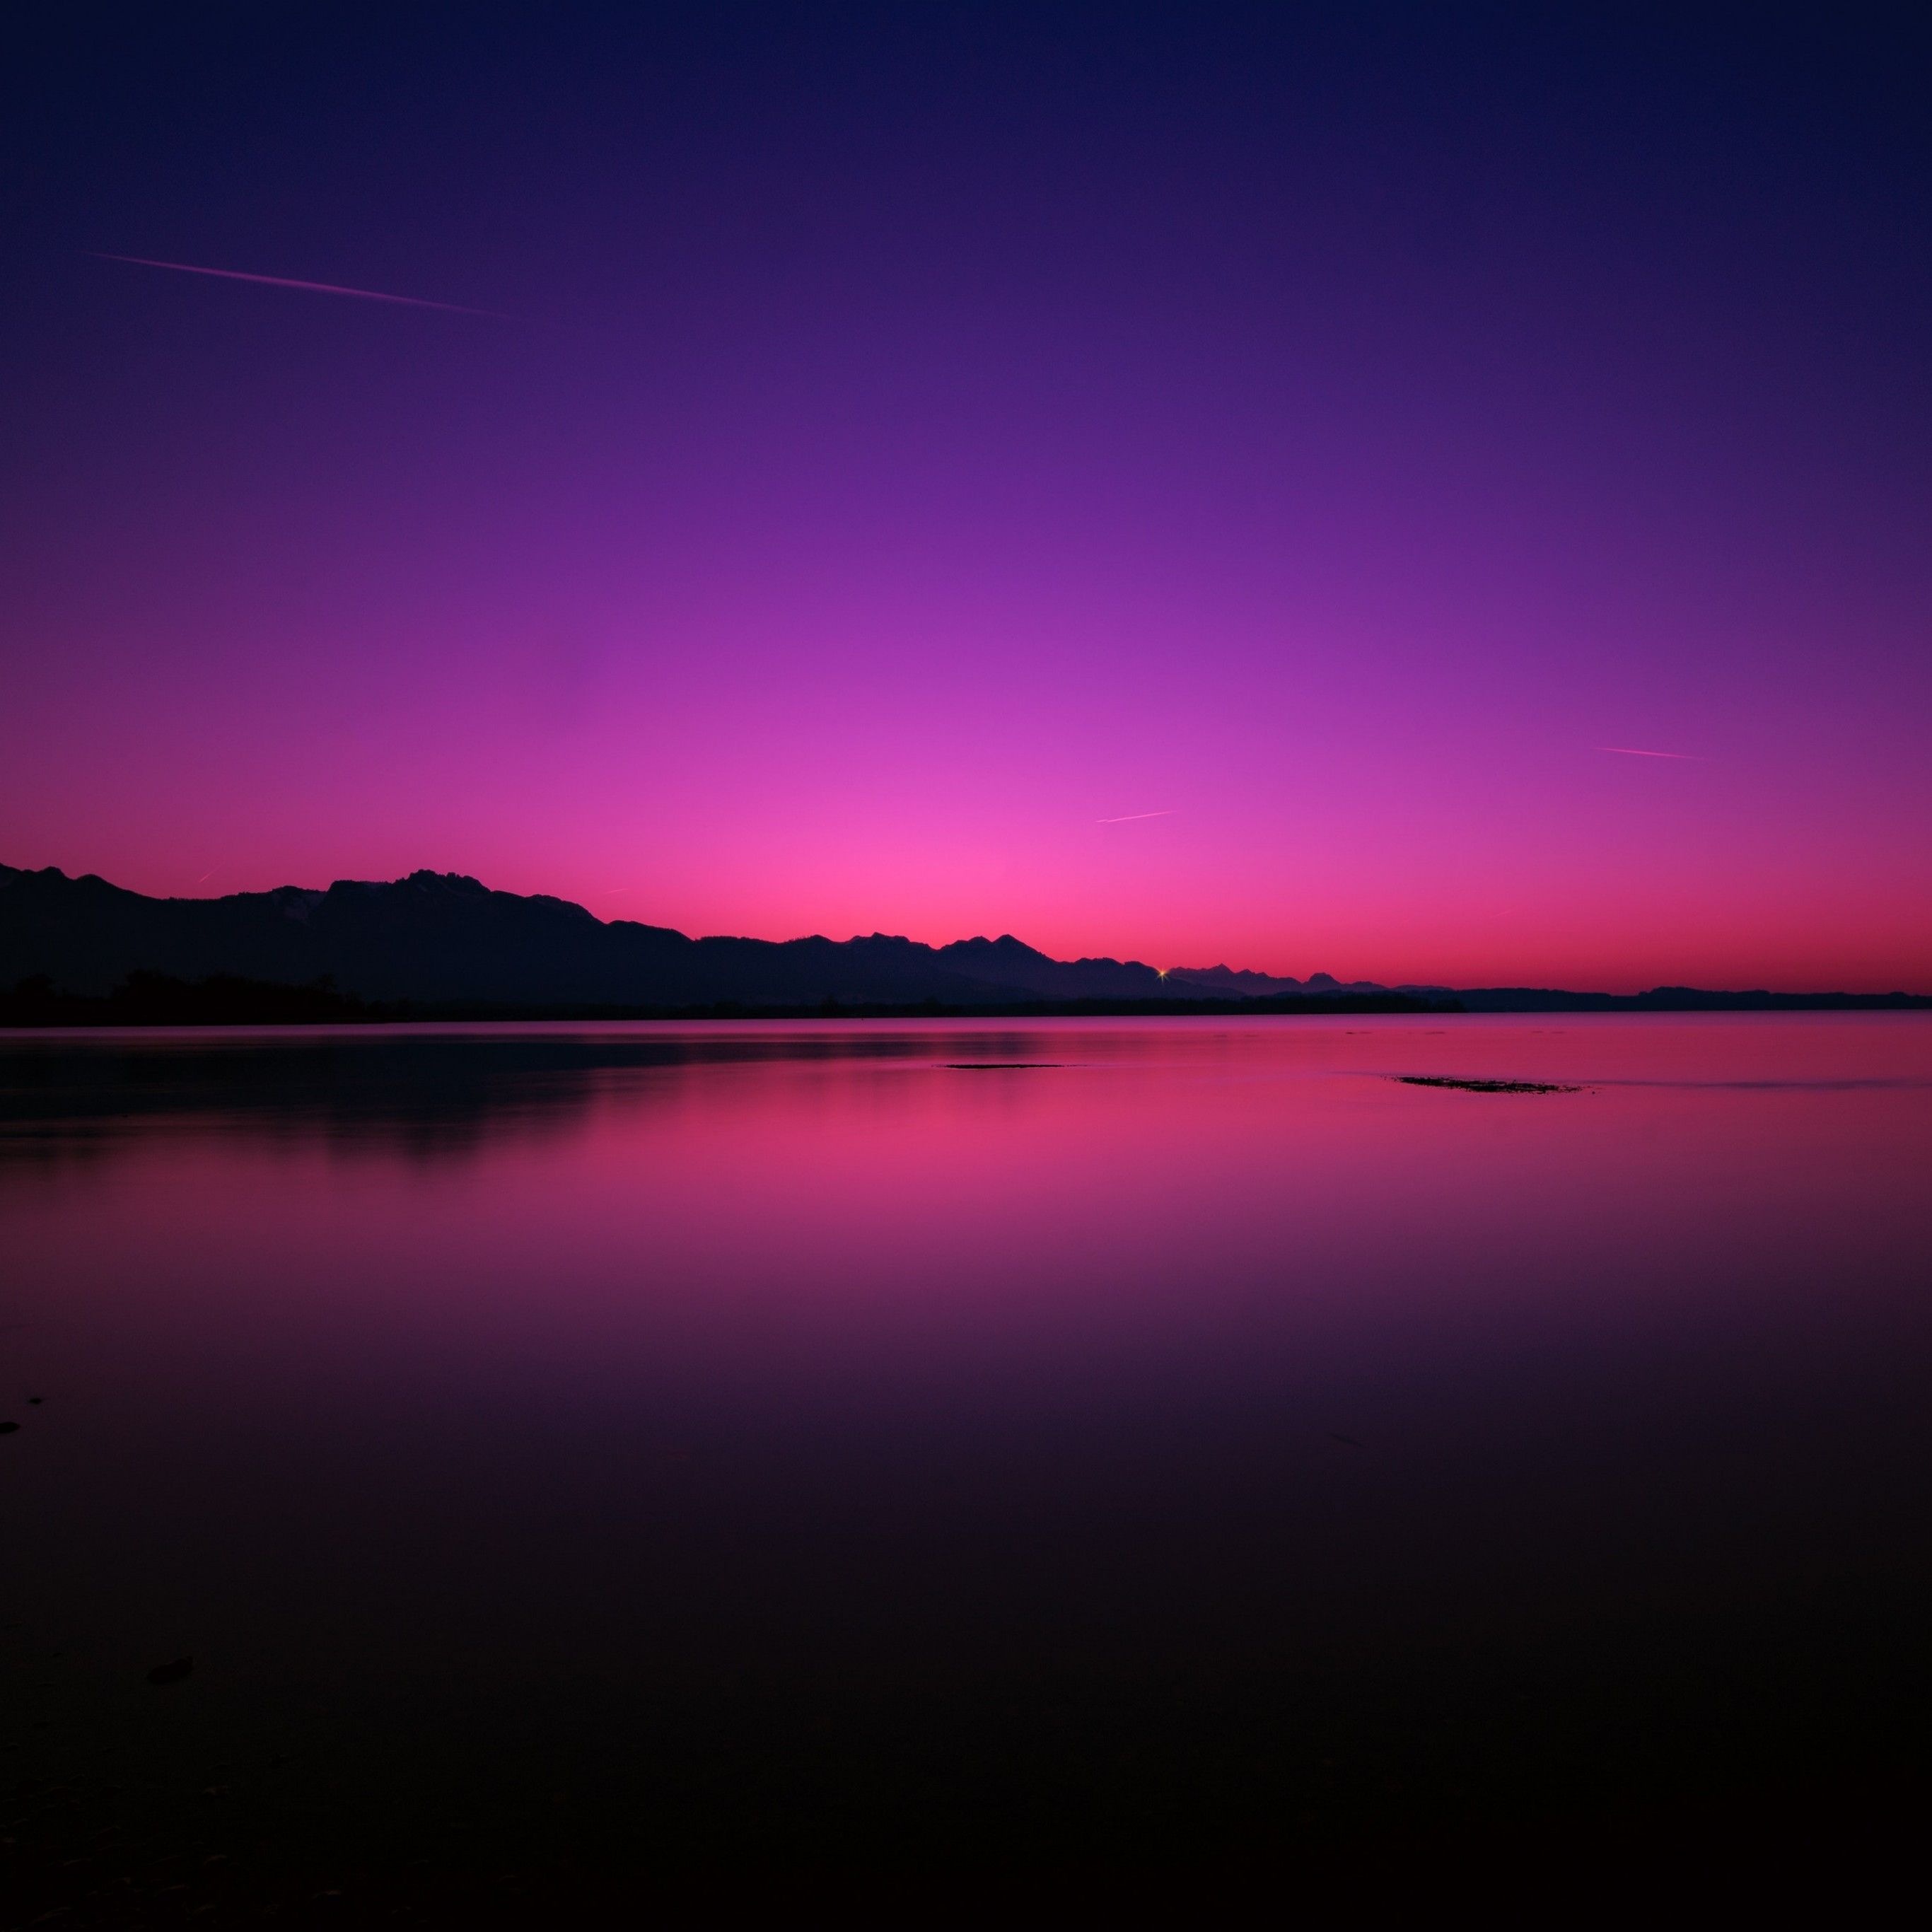 Sunset 4K Wallpaper, Lake, Dusk, Purple sky, Reflection, Dawn, Body of Water, Dark, Backlit, Nature